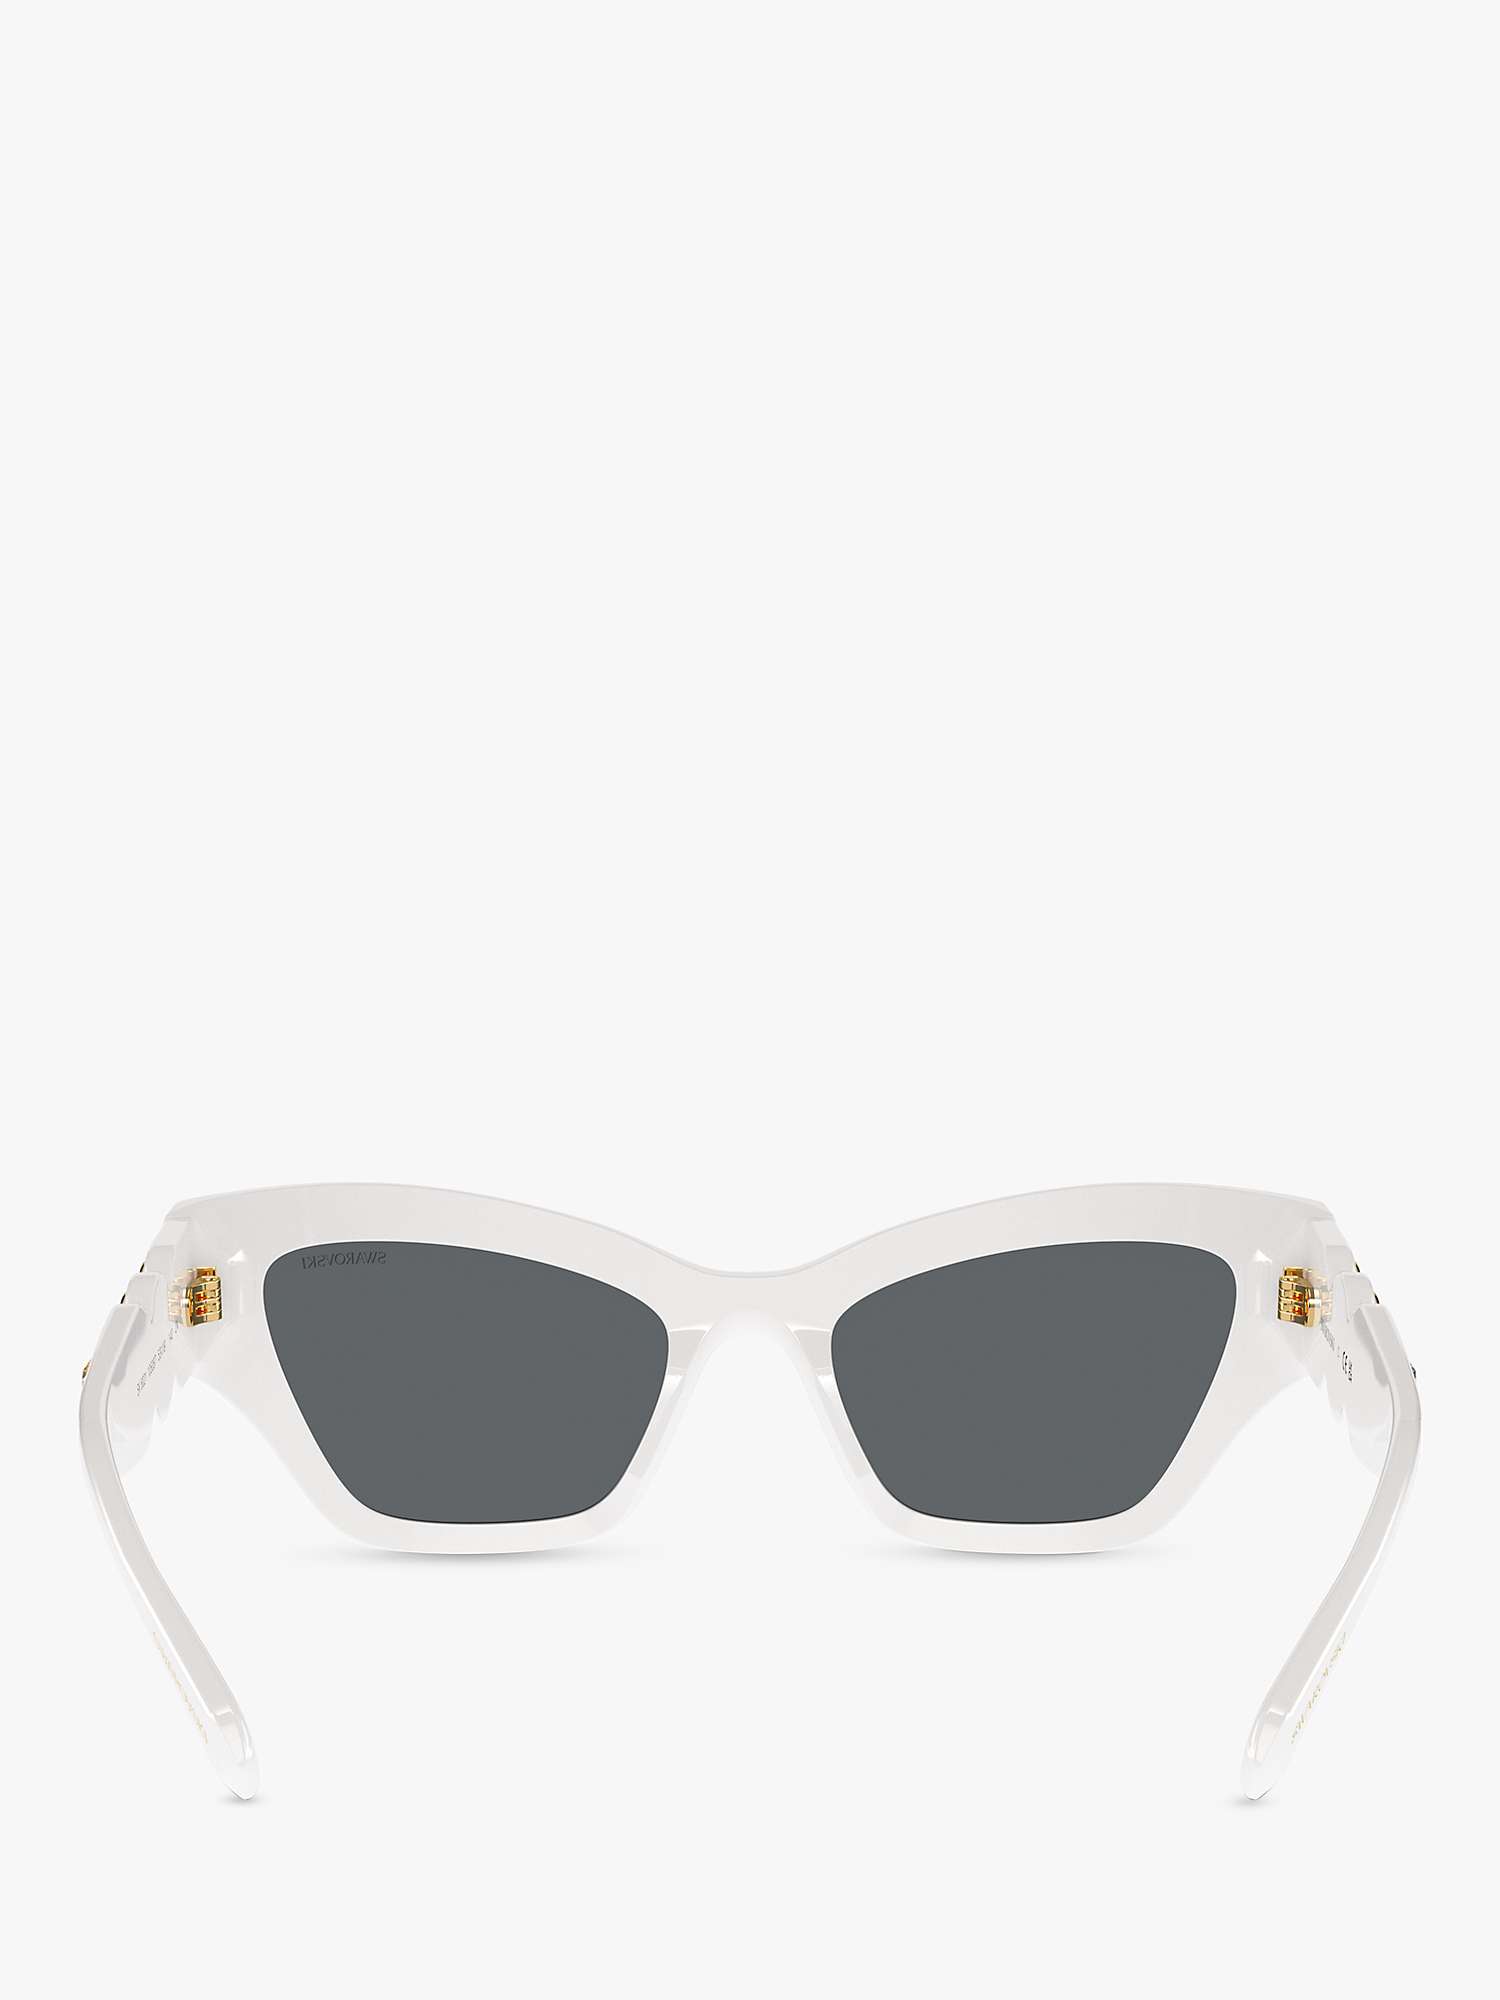 Buy Swarovski SK6021 Women's Cat's Eye Sunglasses, White/Grey Online at johnlewis.com